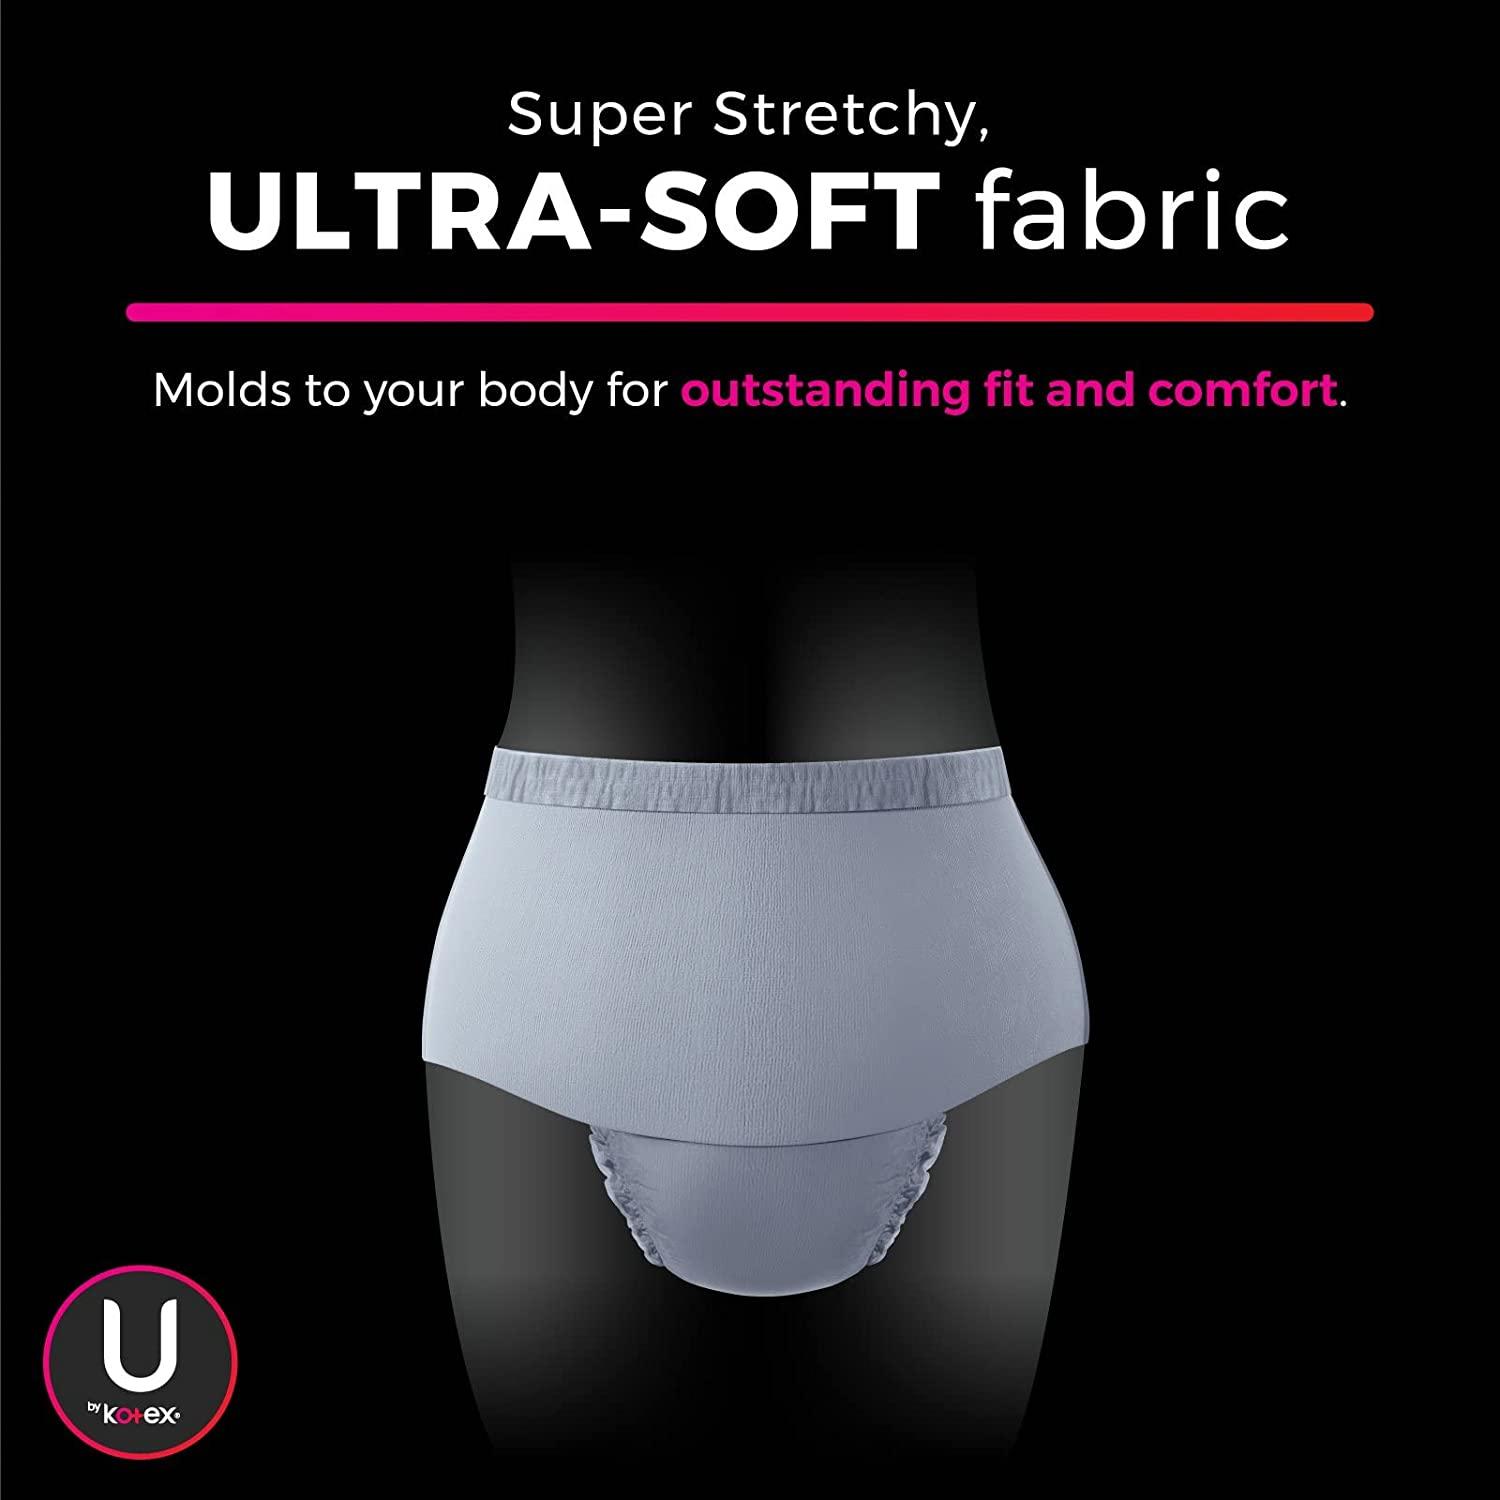 U by Kotex DreamWear Disposable Overnight Period Underwear for